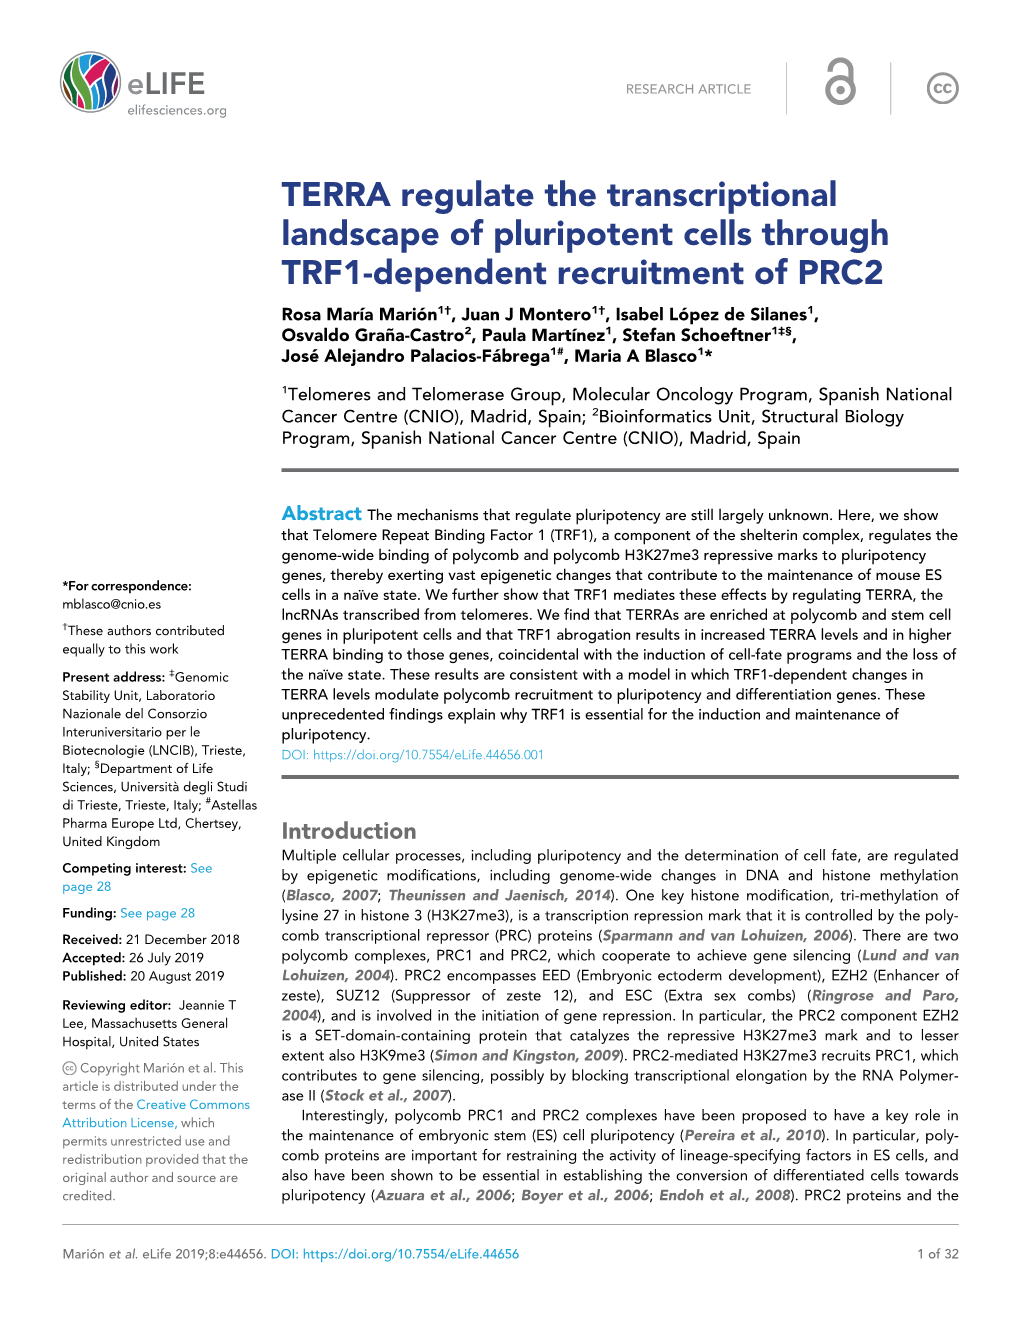 TERRA Regulate the Transcriptional Landscape of Pluripotent Cells